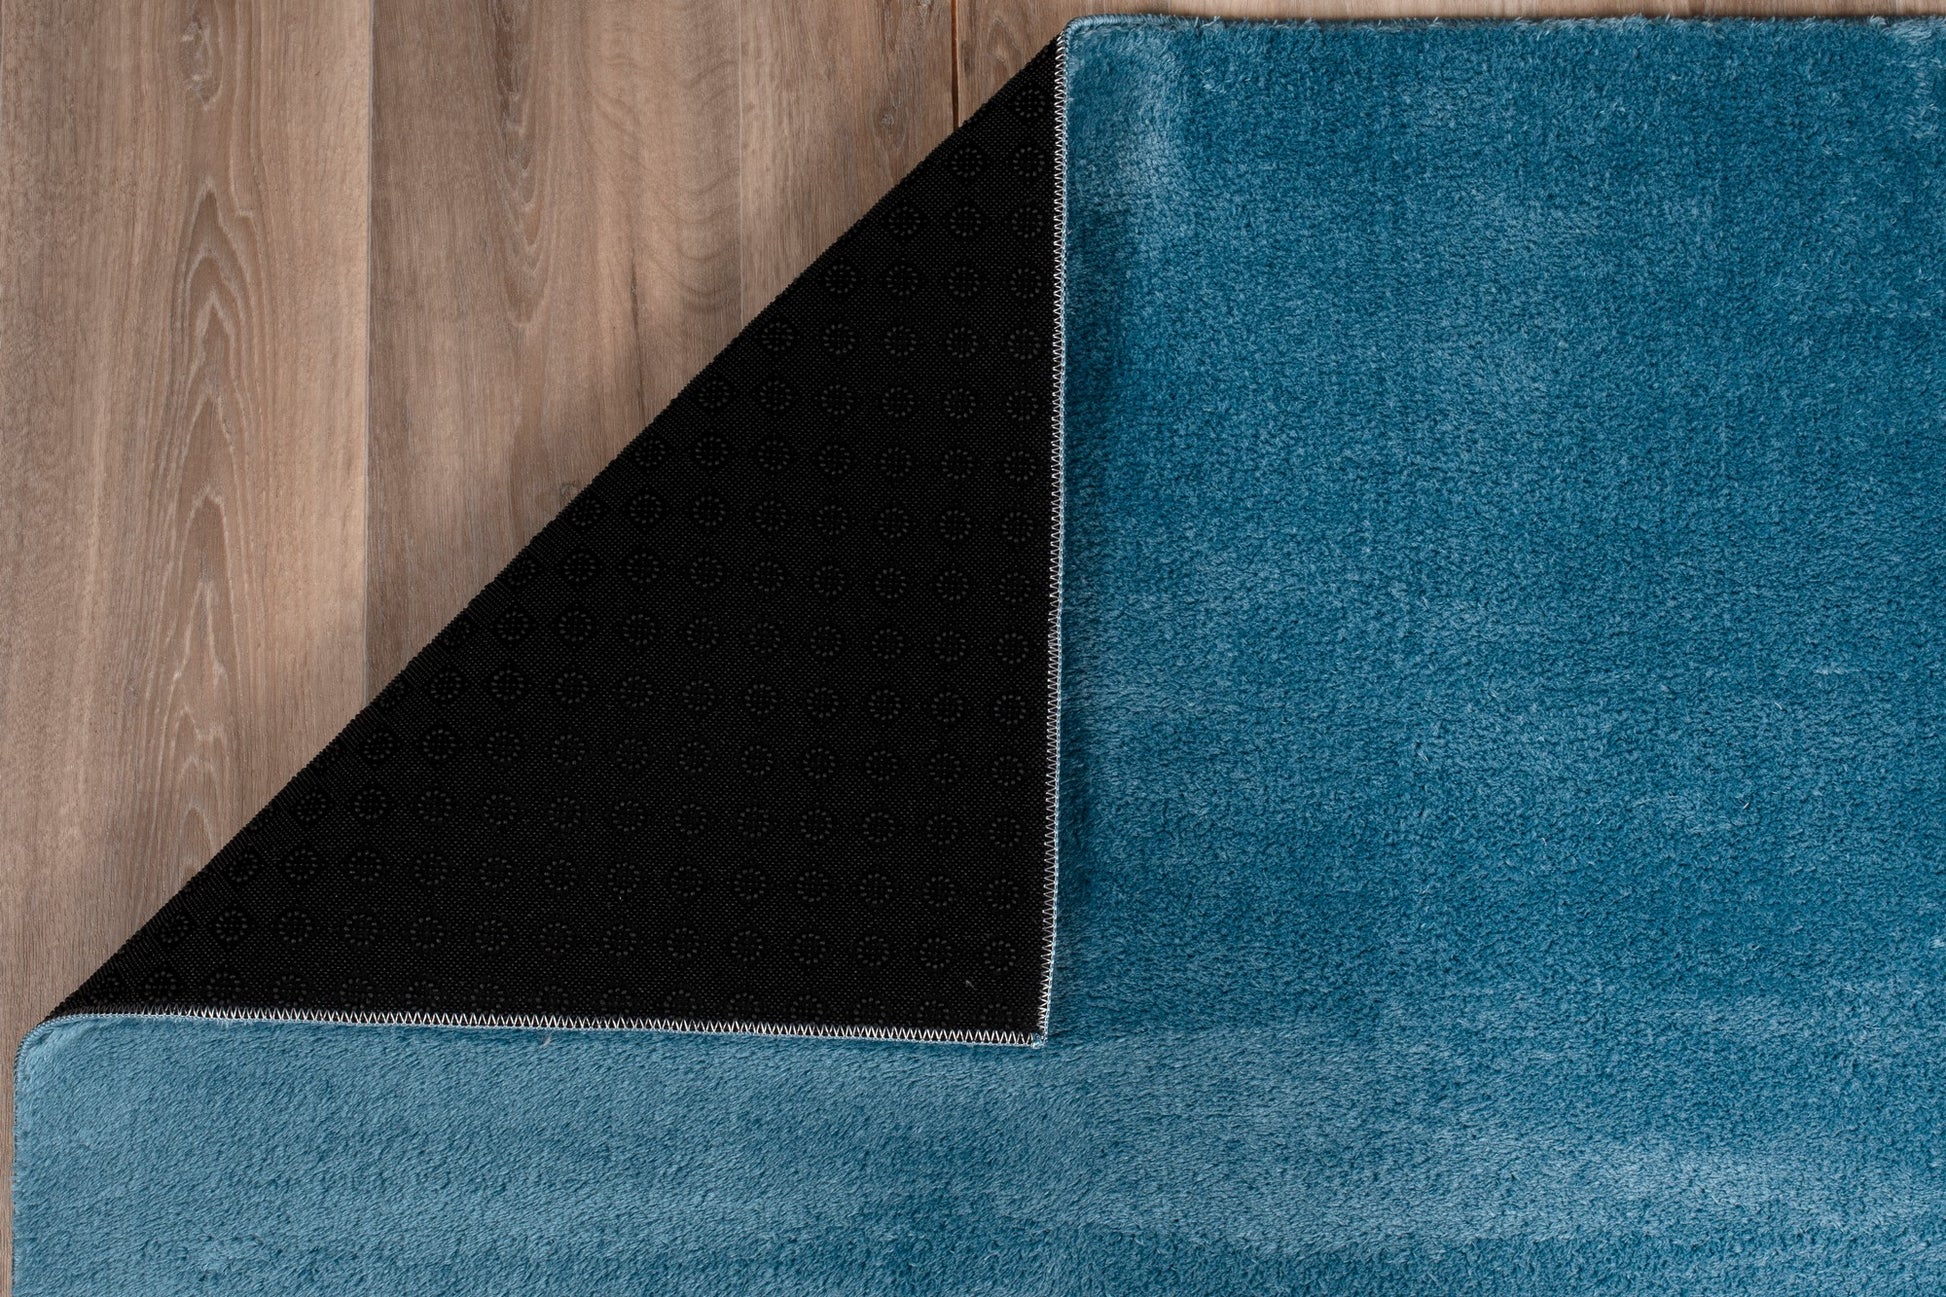 blue fluffy soft machine washable area rug for living room bedroom 6x8, 6x9 ft Living Room, Bedroom, Dining Area, Kitchen Carpet